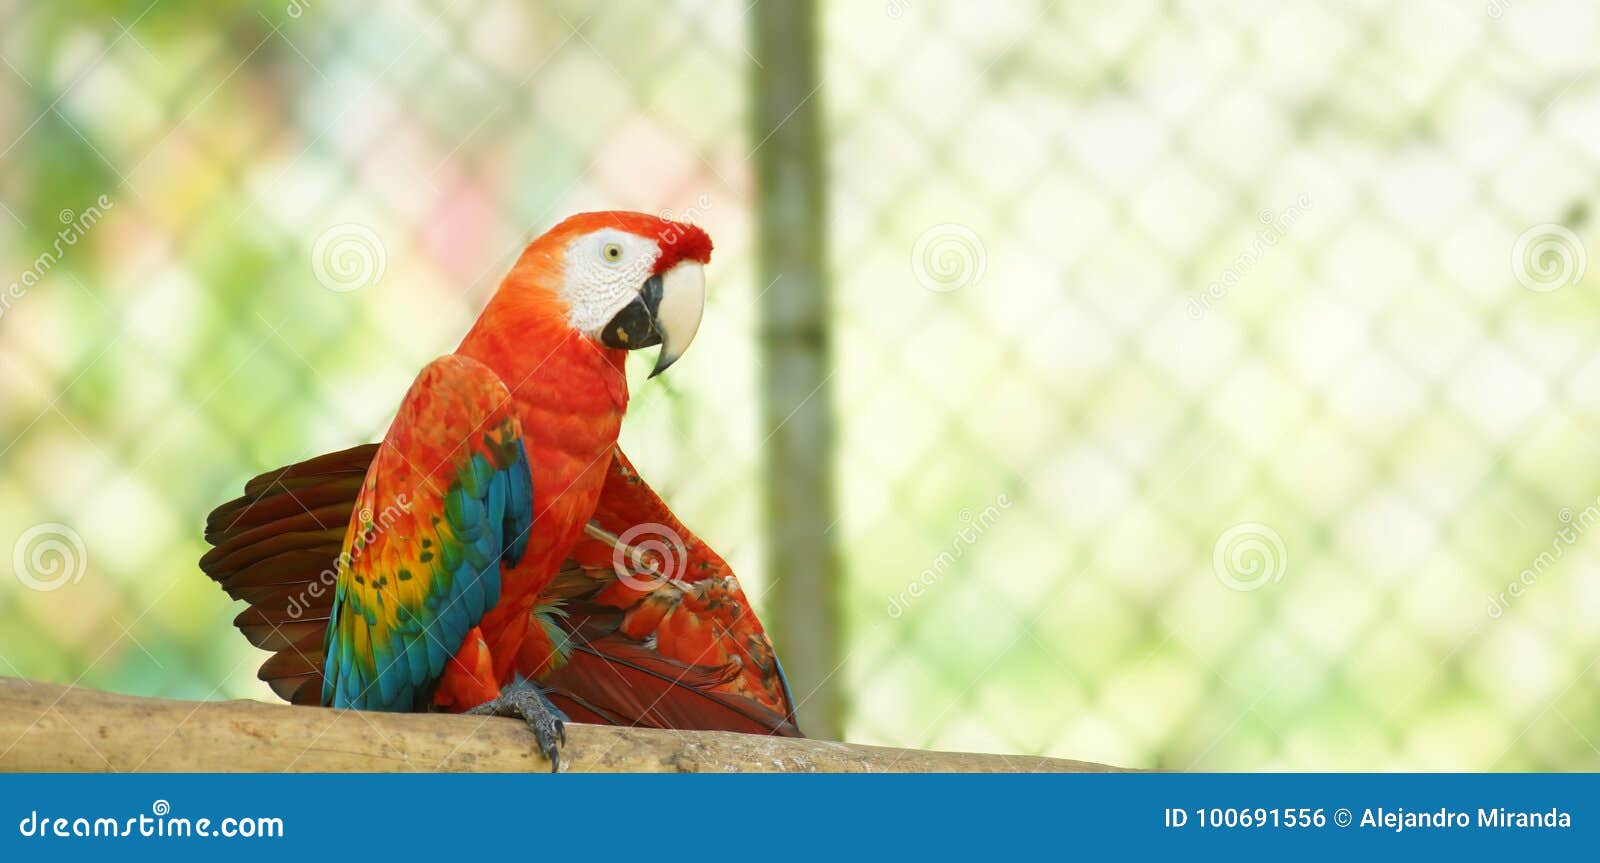 caged macaw on a branch in ecuadorian amazon. common names: guacamayo or papagayo